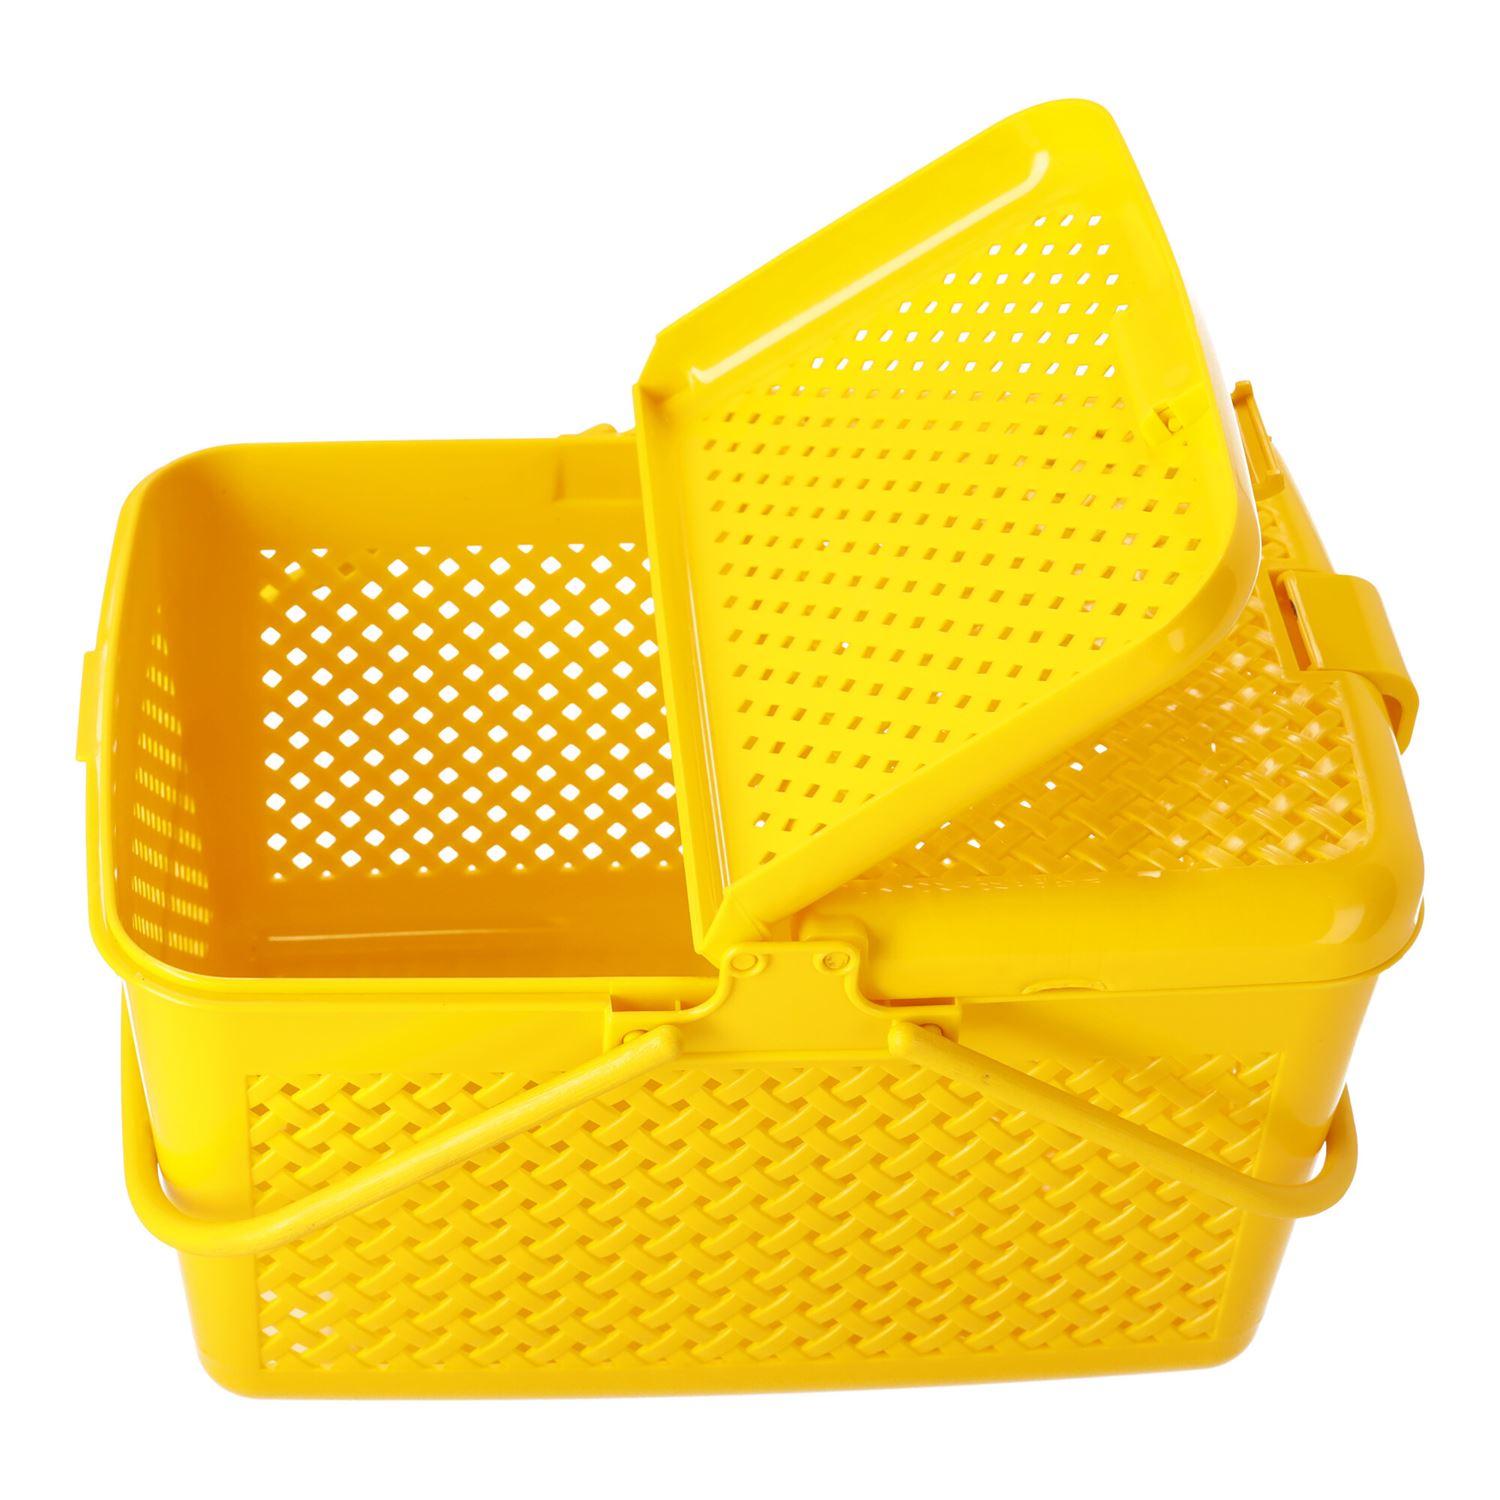 Rectangular picnic basket lockable yellow, POLISH PRODUCT